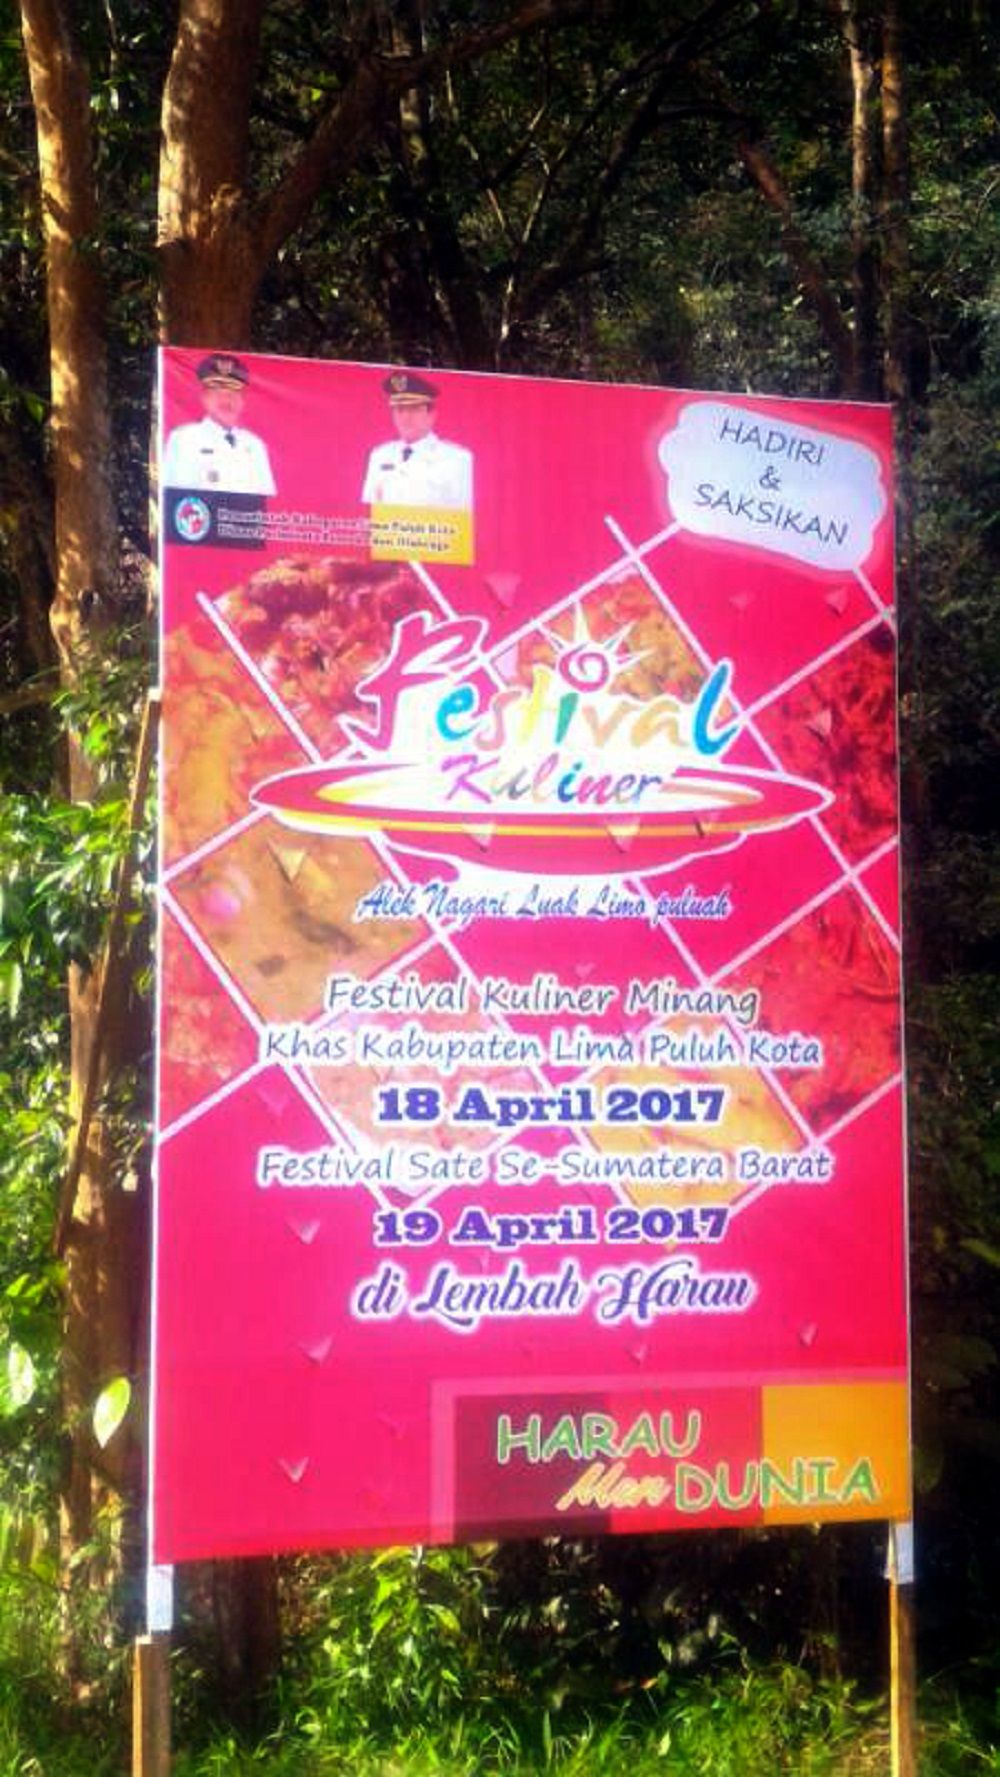 Digeber, Festival Sate Sumatera Barat dan Kuliner Limapuluh Kota